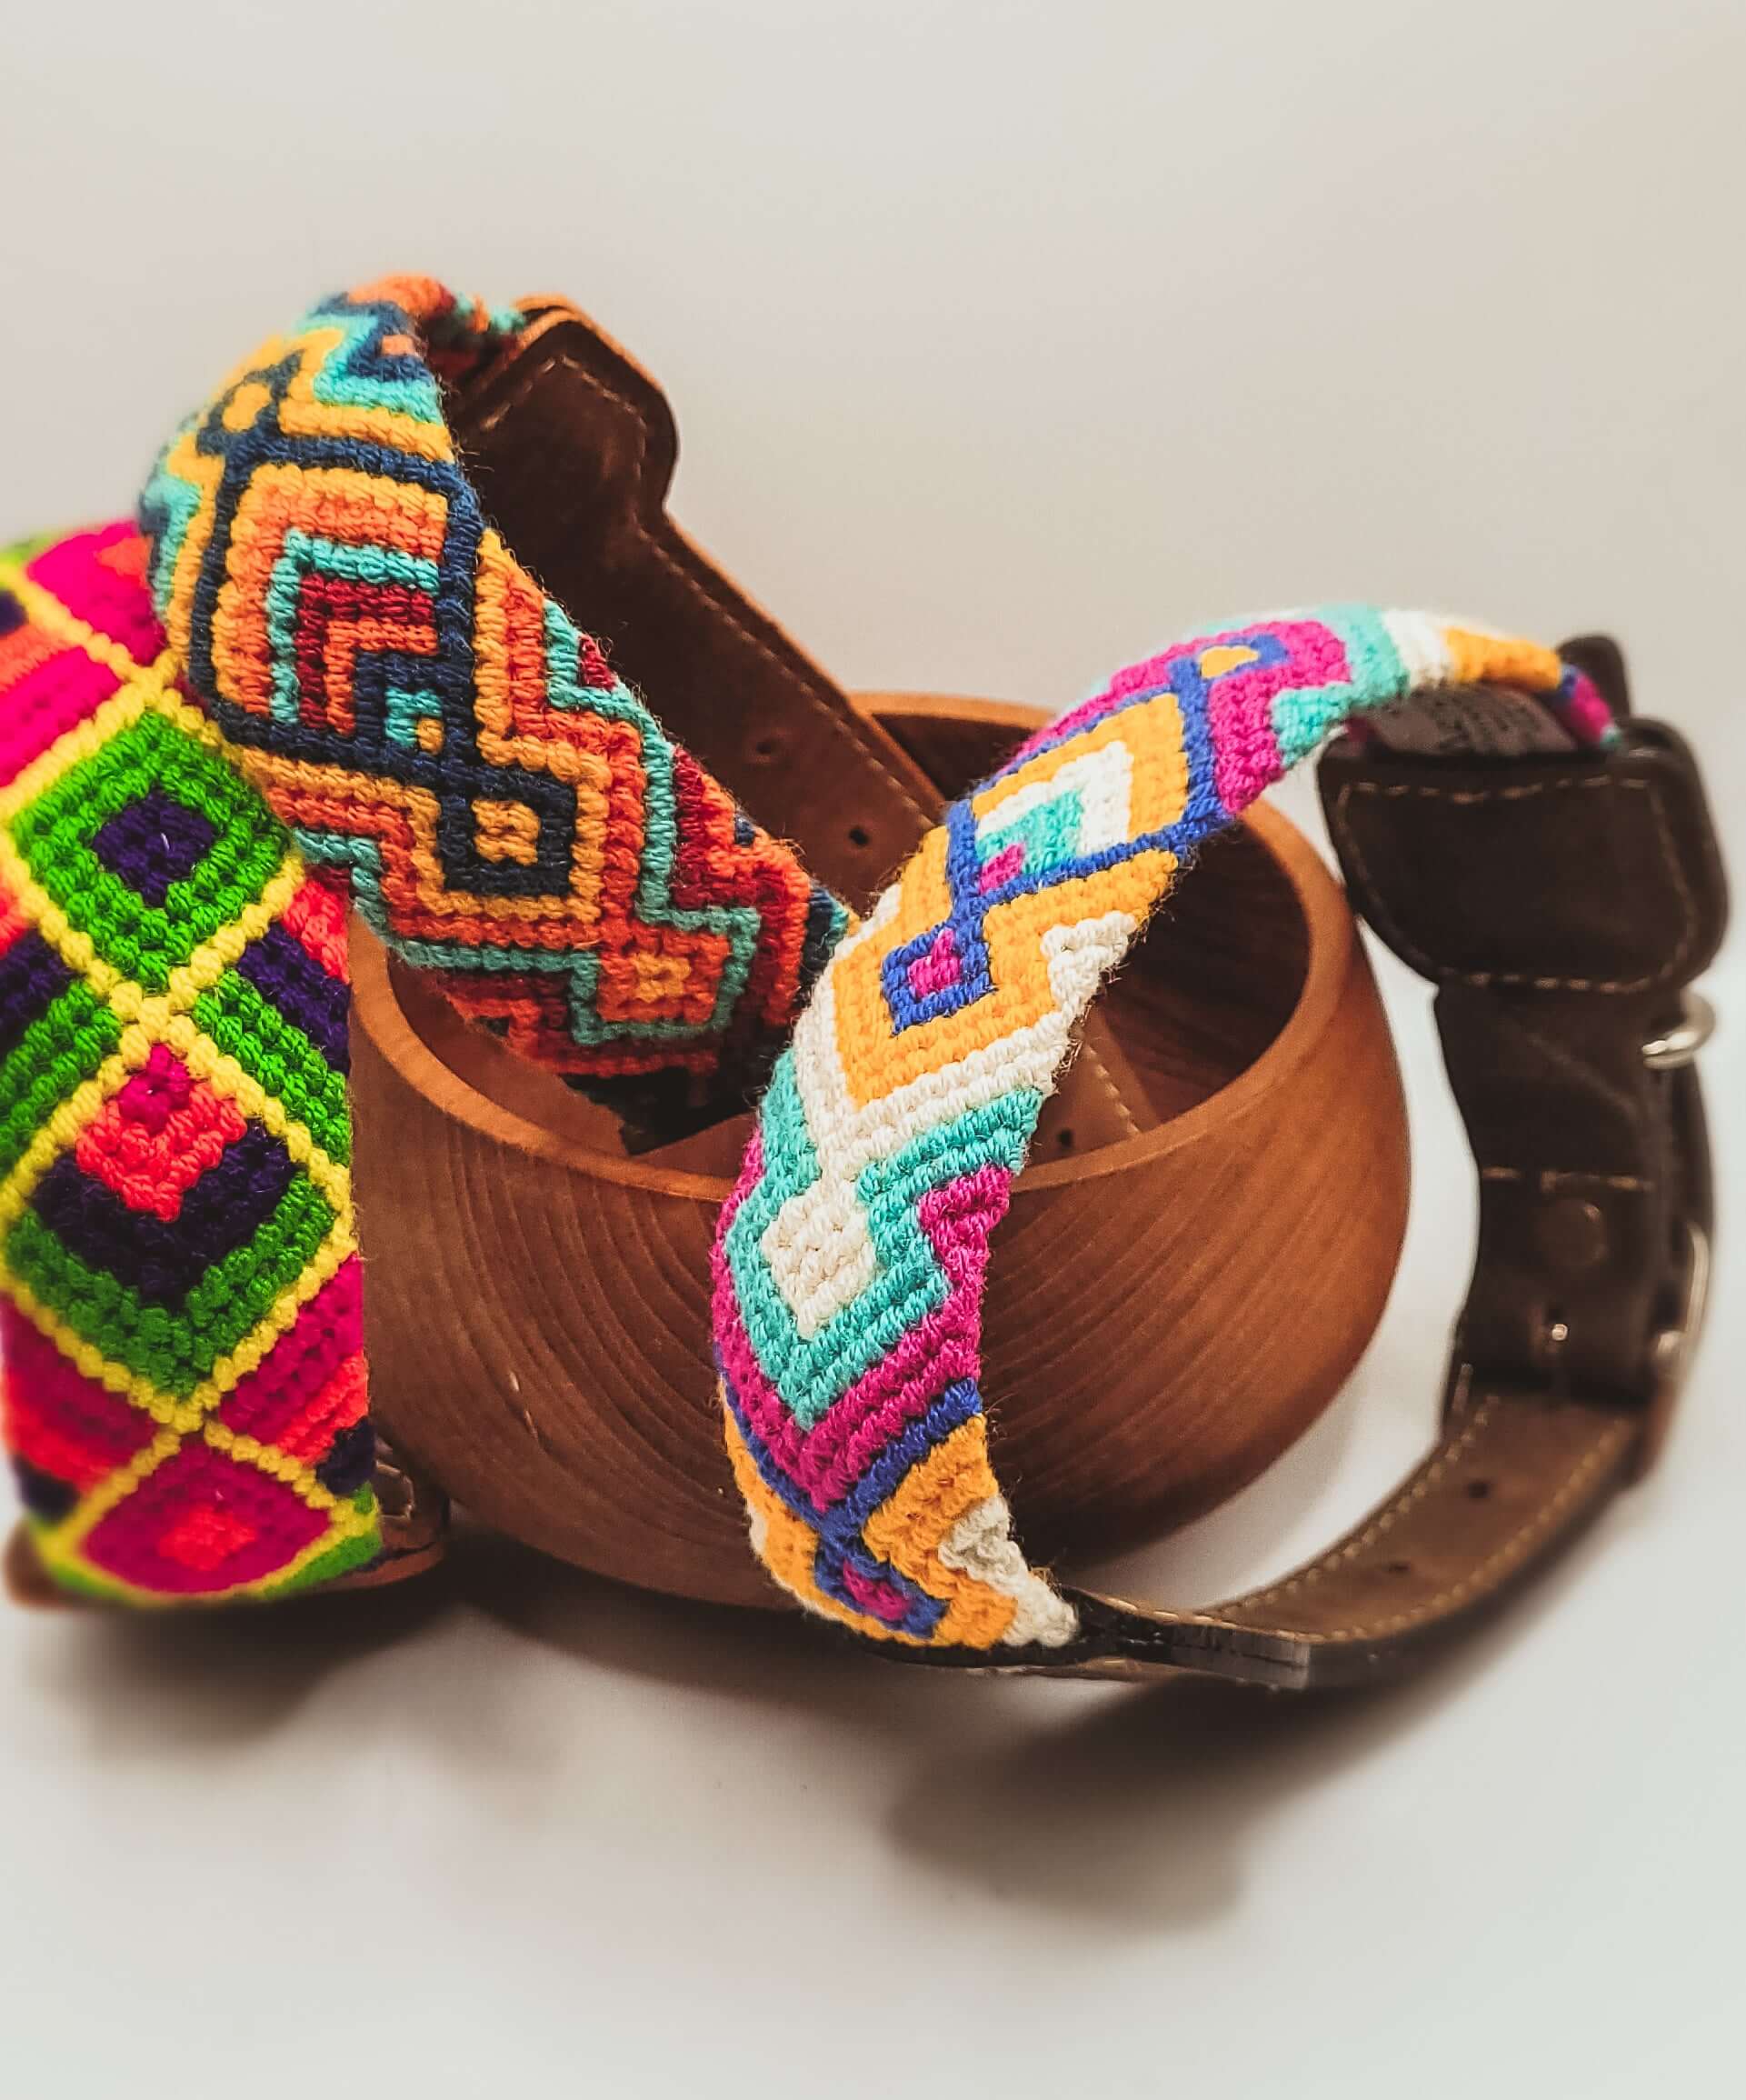 Colourful handwoven artisan dog collars